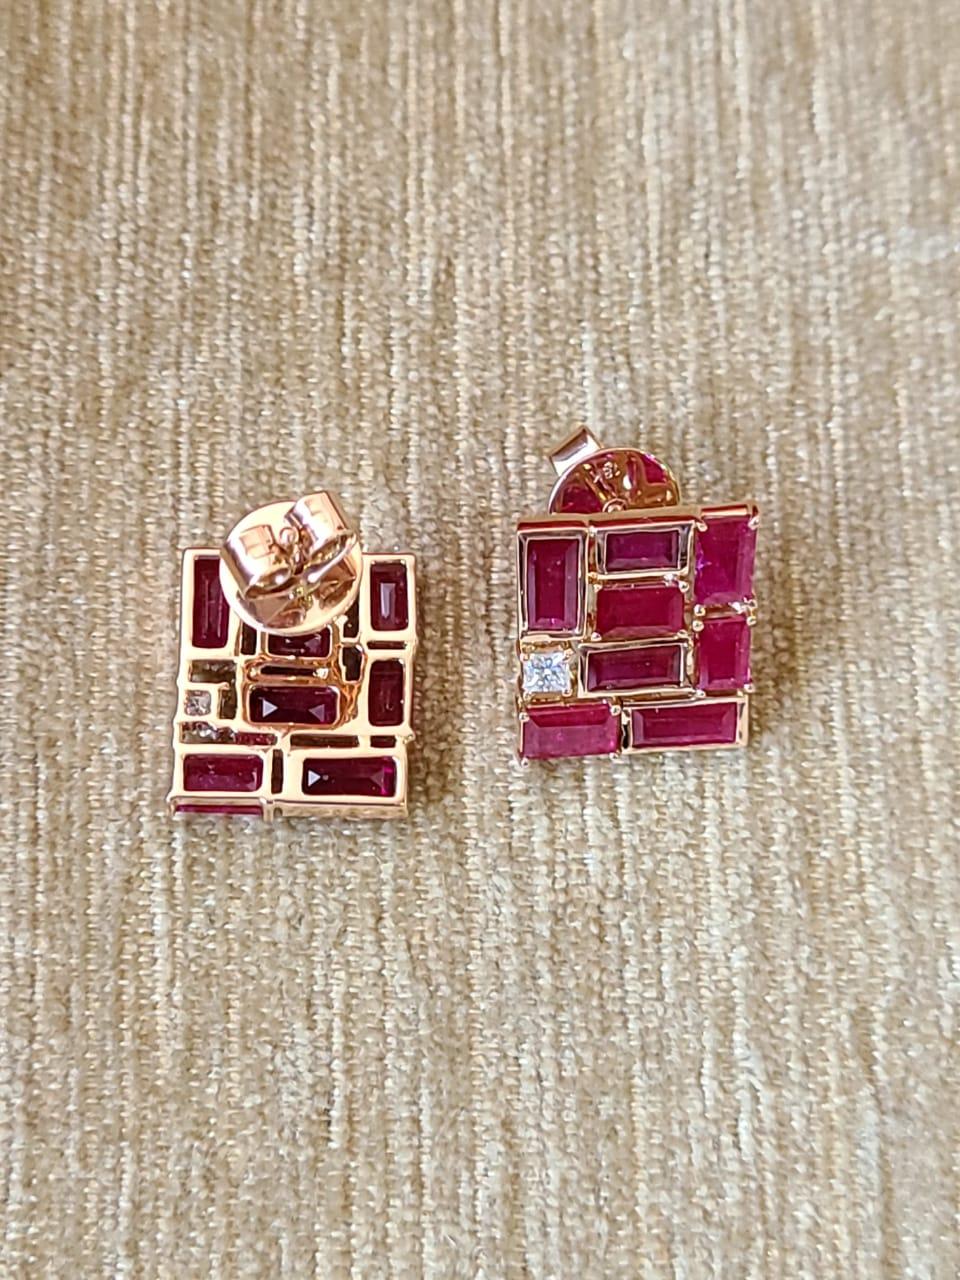 Princess Cut Set in 18K Rose Gold, 3.86 Carats, Mozambique Ruby & Diamonds Stud Earrings 